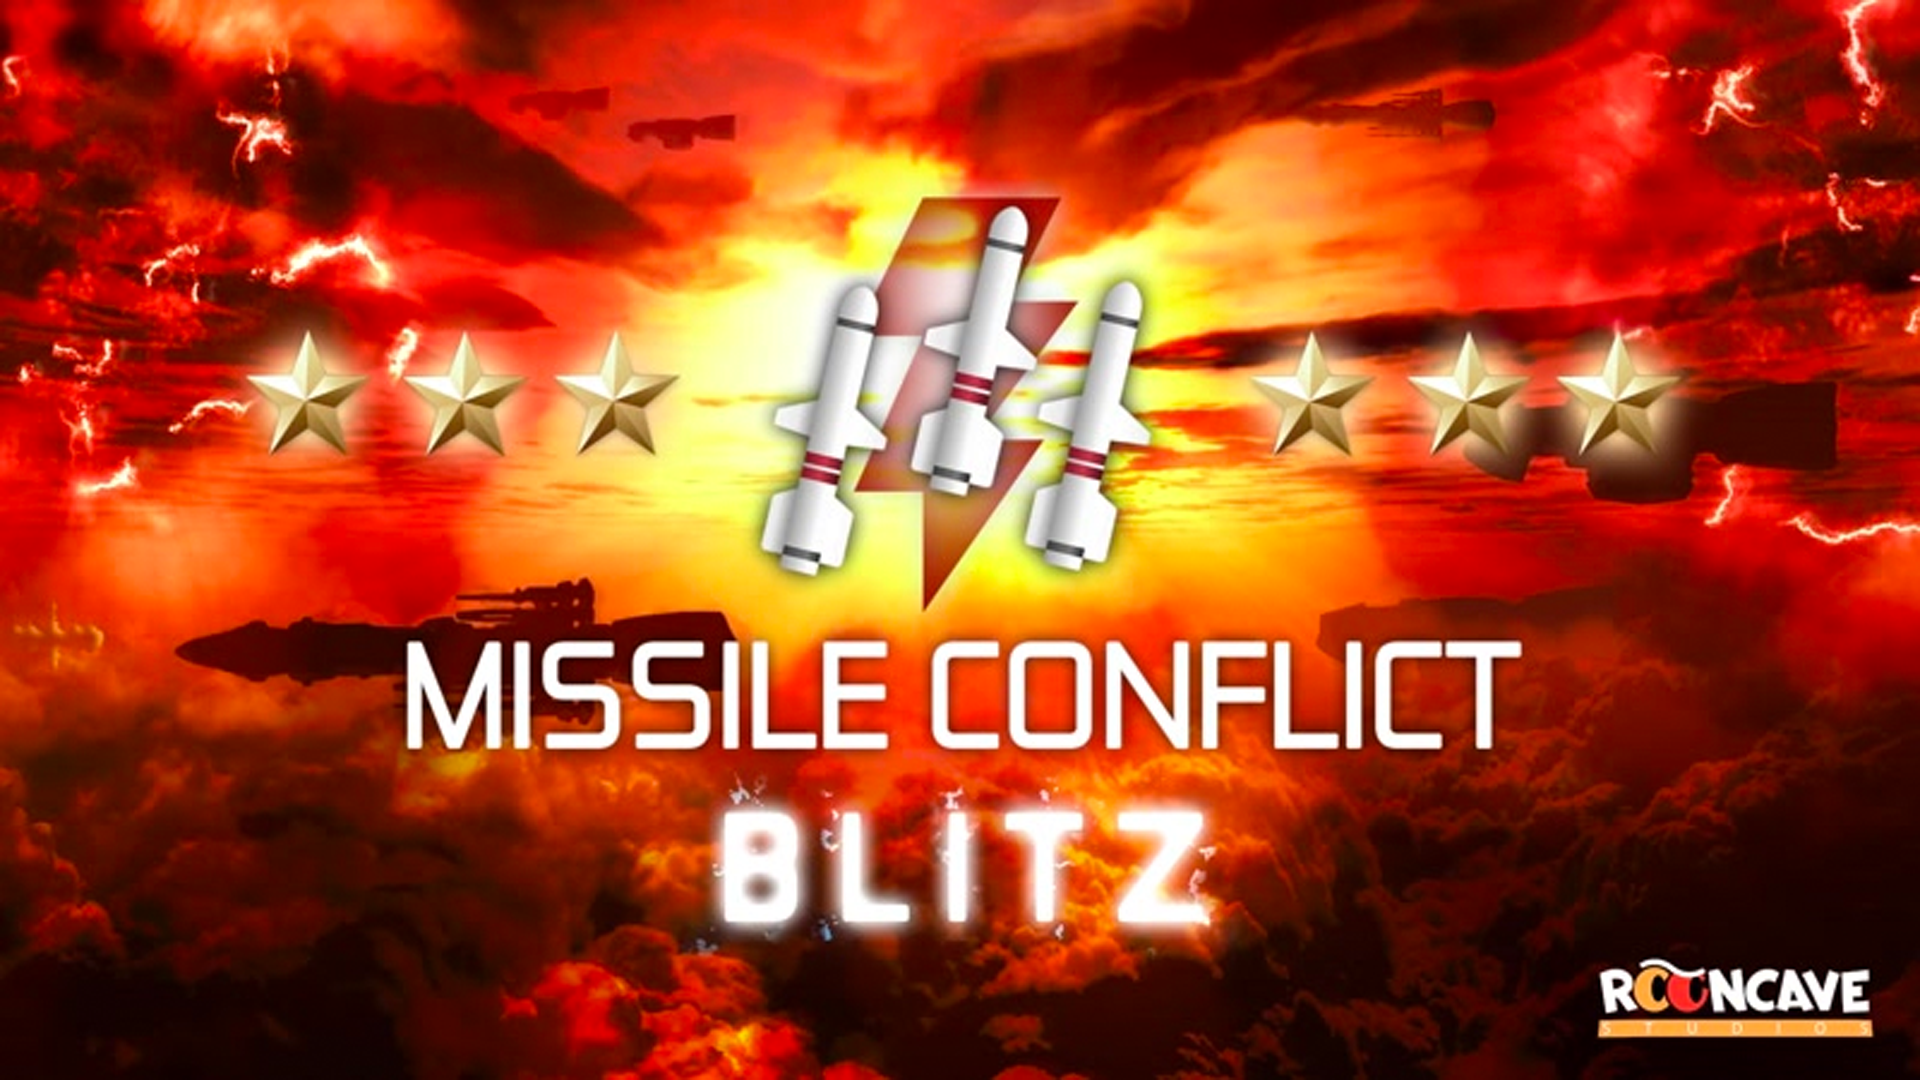 Banner of Conflitto missilistico BLITZ 